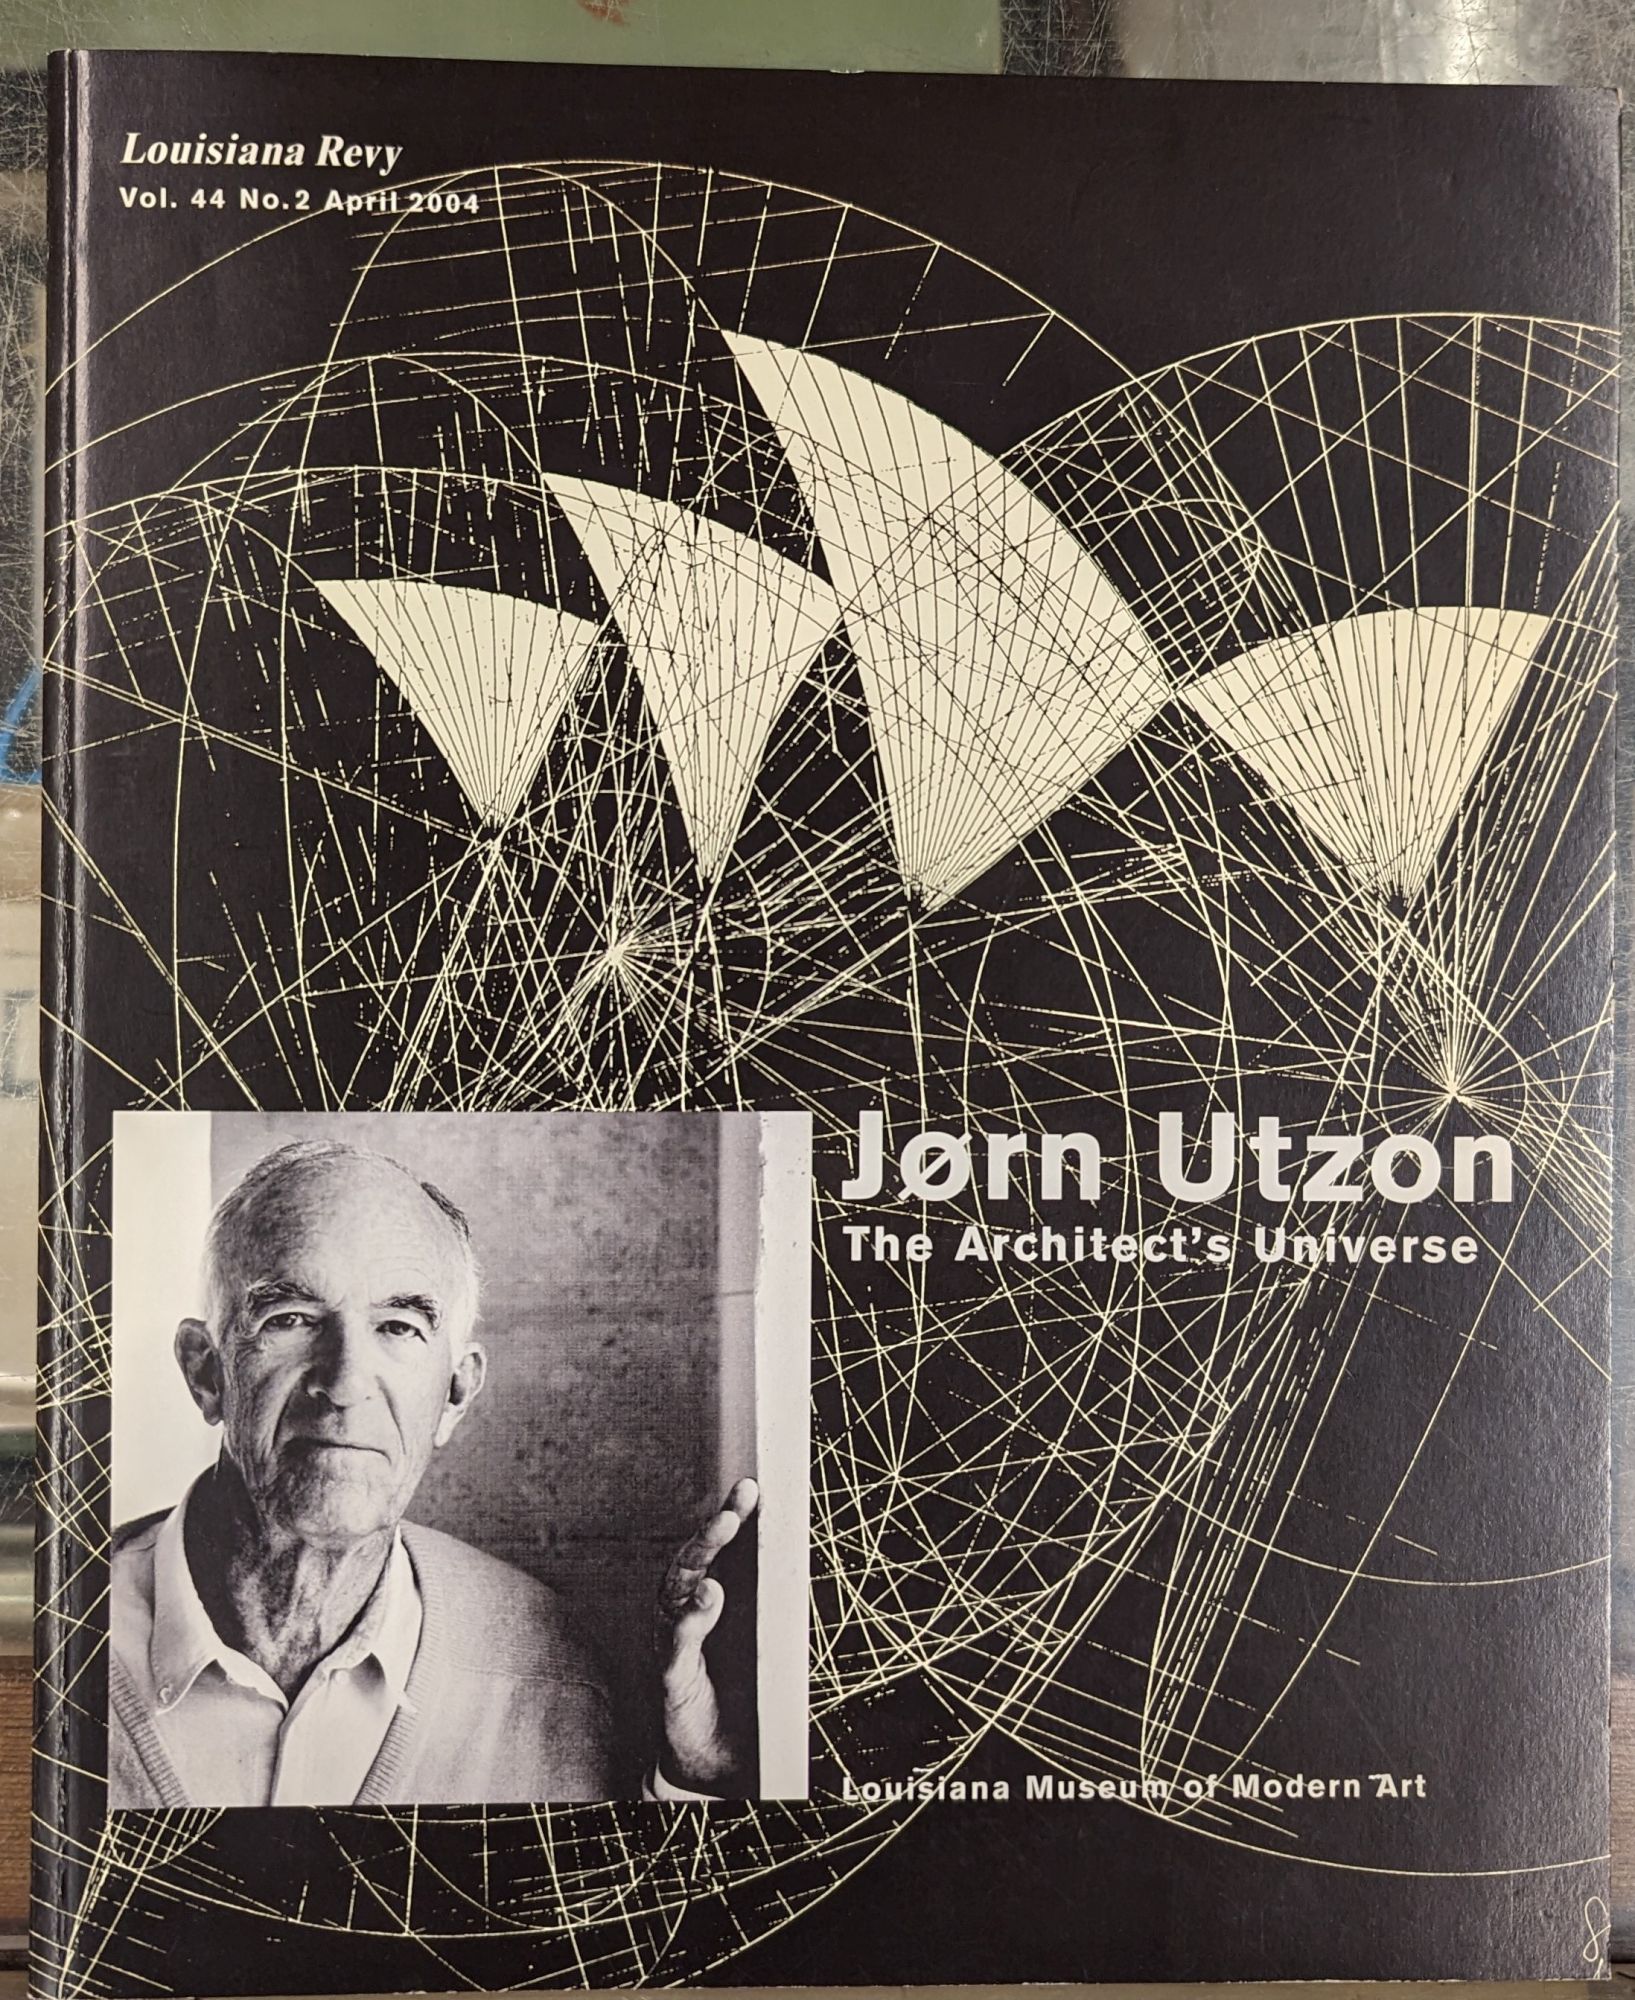 Louisiana Revy, Vol 44 April 2004: Jorn Utzon, The Architect's Universe - Utzon, Jorn; TØjner, Poul Erik; Frampton, Kenneth